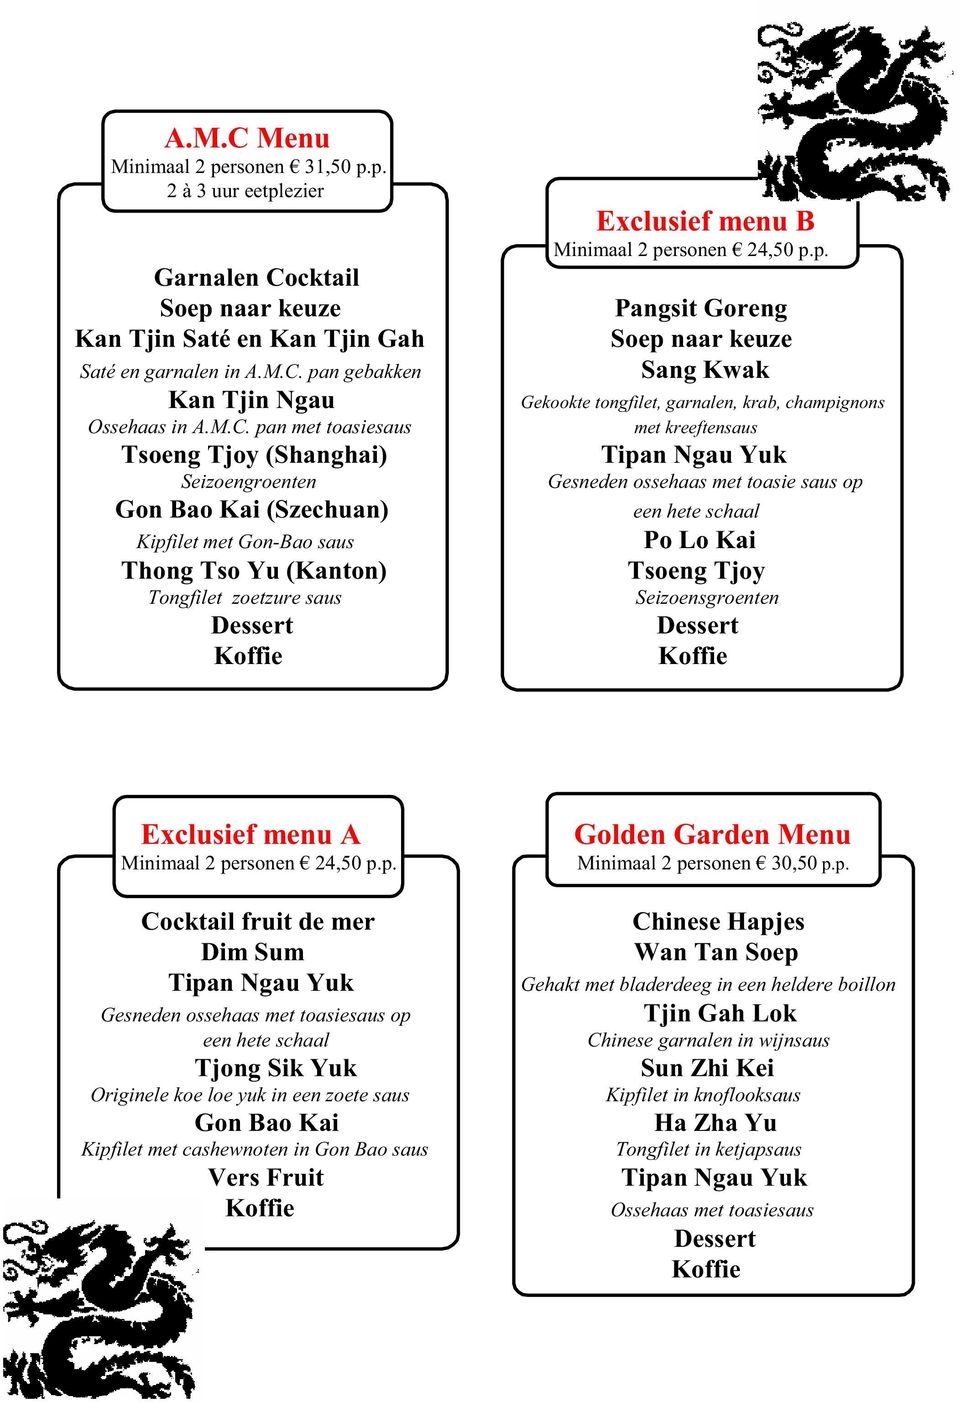 Gon-Bao saus Po Lo Kai Thong Tso Yu (Kanton) Tsoeng Tjoy Tongfilet zoetzure saus Seizoensgroenten Dessert Dessert Exclusief menu A Minimaal 2 personen 24,50 p.p. Golden Garden Menu Minimaal 2 personen 30,50 p.